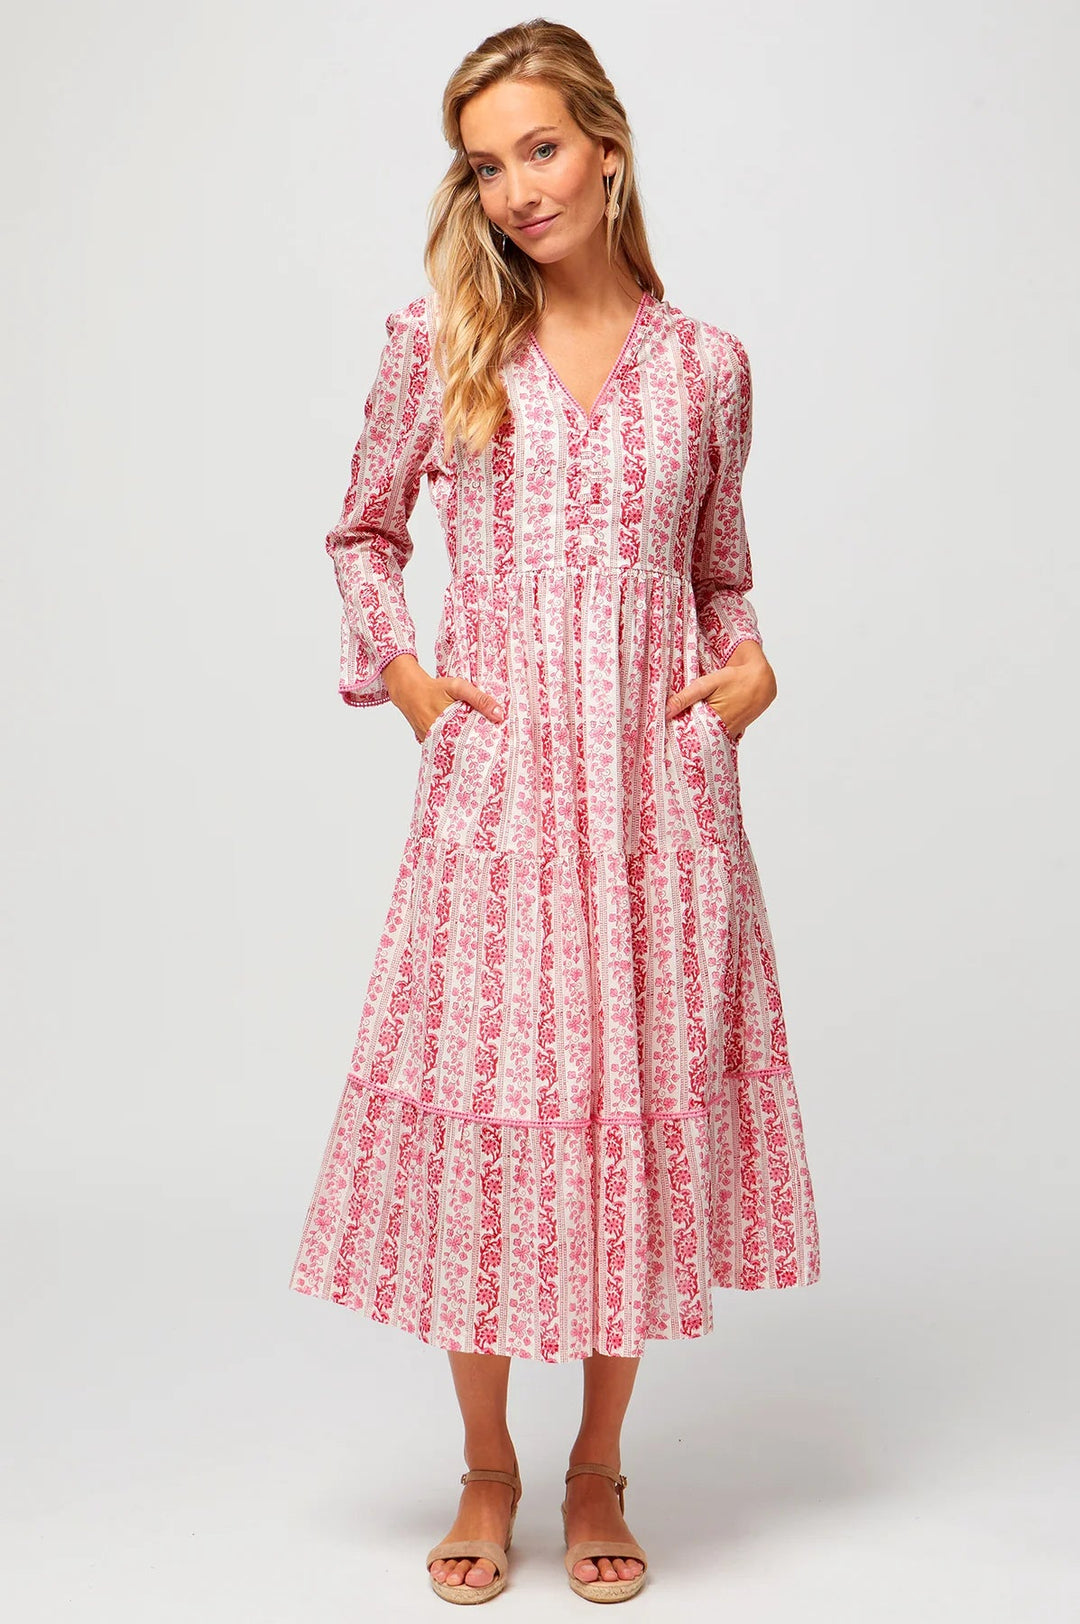 Hattie Dress by Aspiga Hattie Dress Aspiga Medium Linear Botanical Pink 